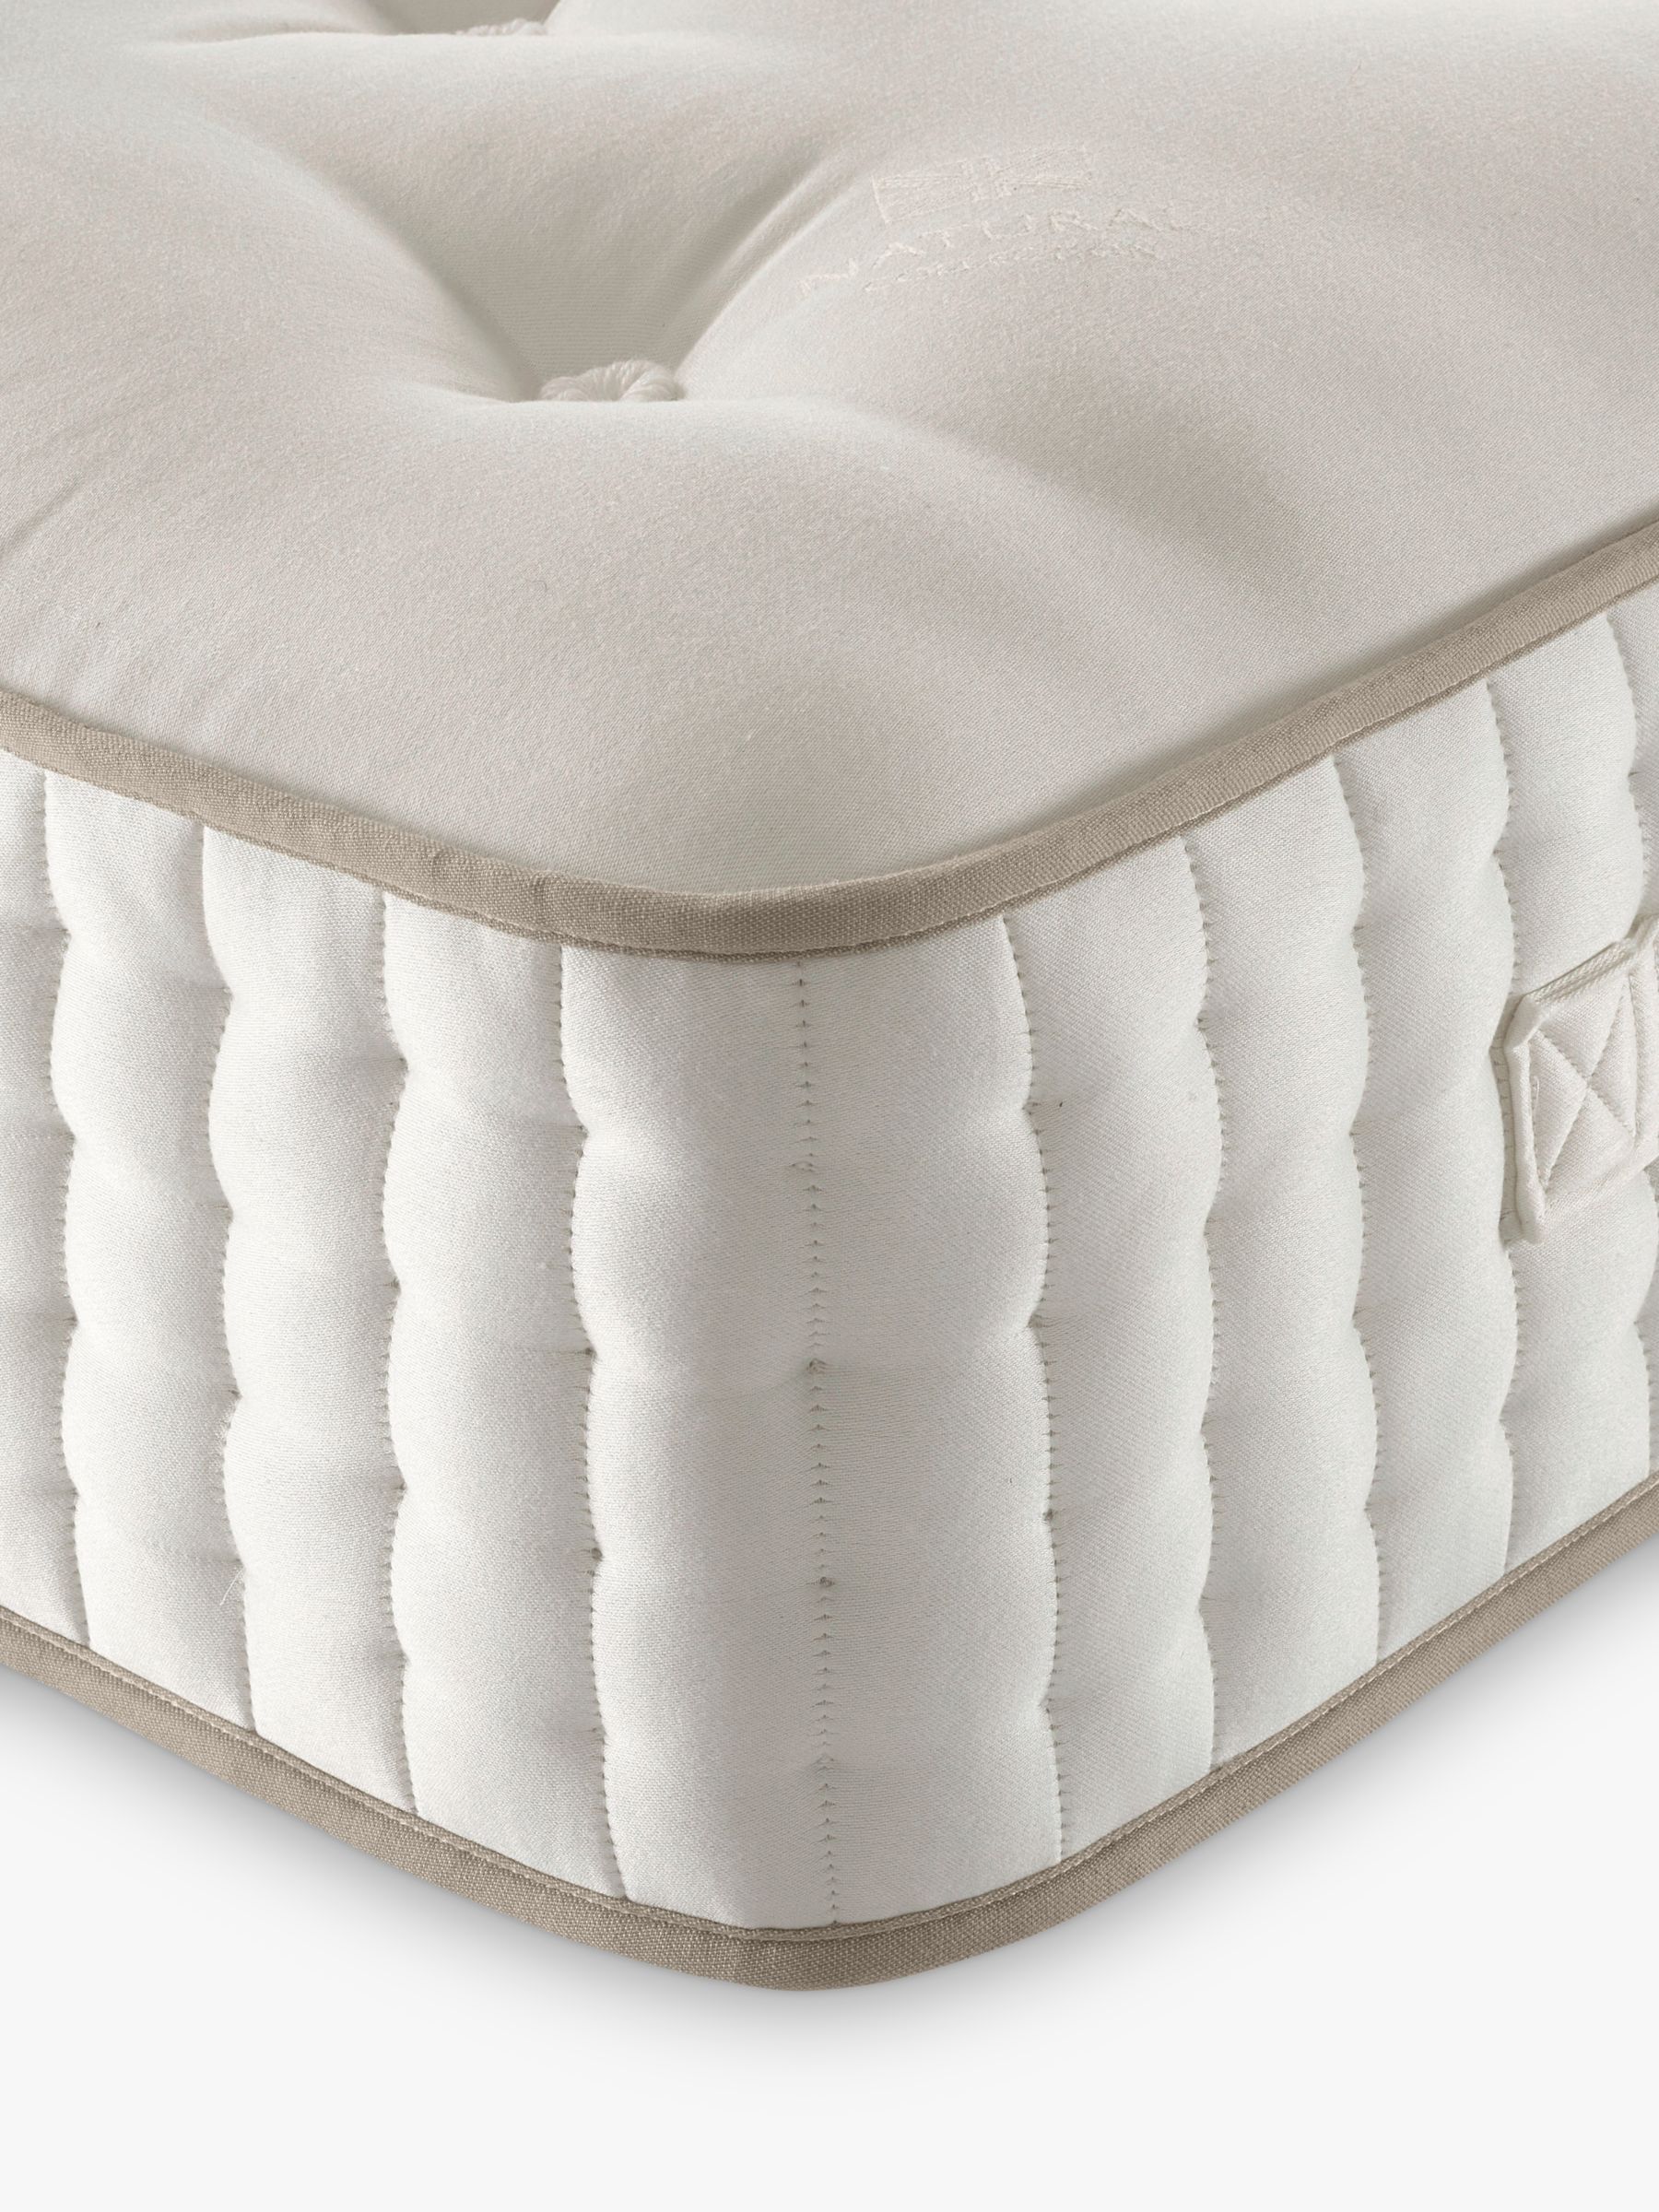 Photo of John lewis luxury natural collection cashmere 27000 king size regular tension pocket spring zip link mattress